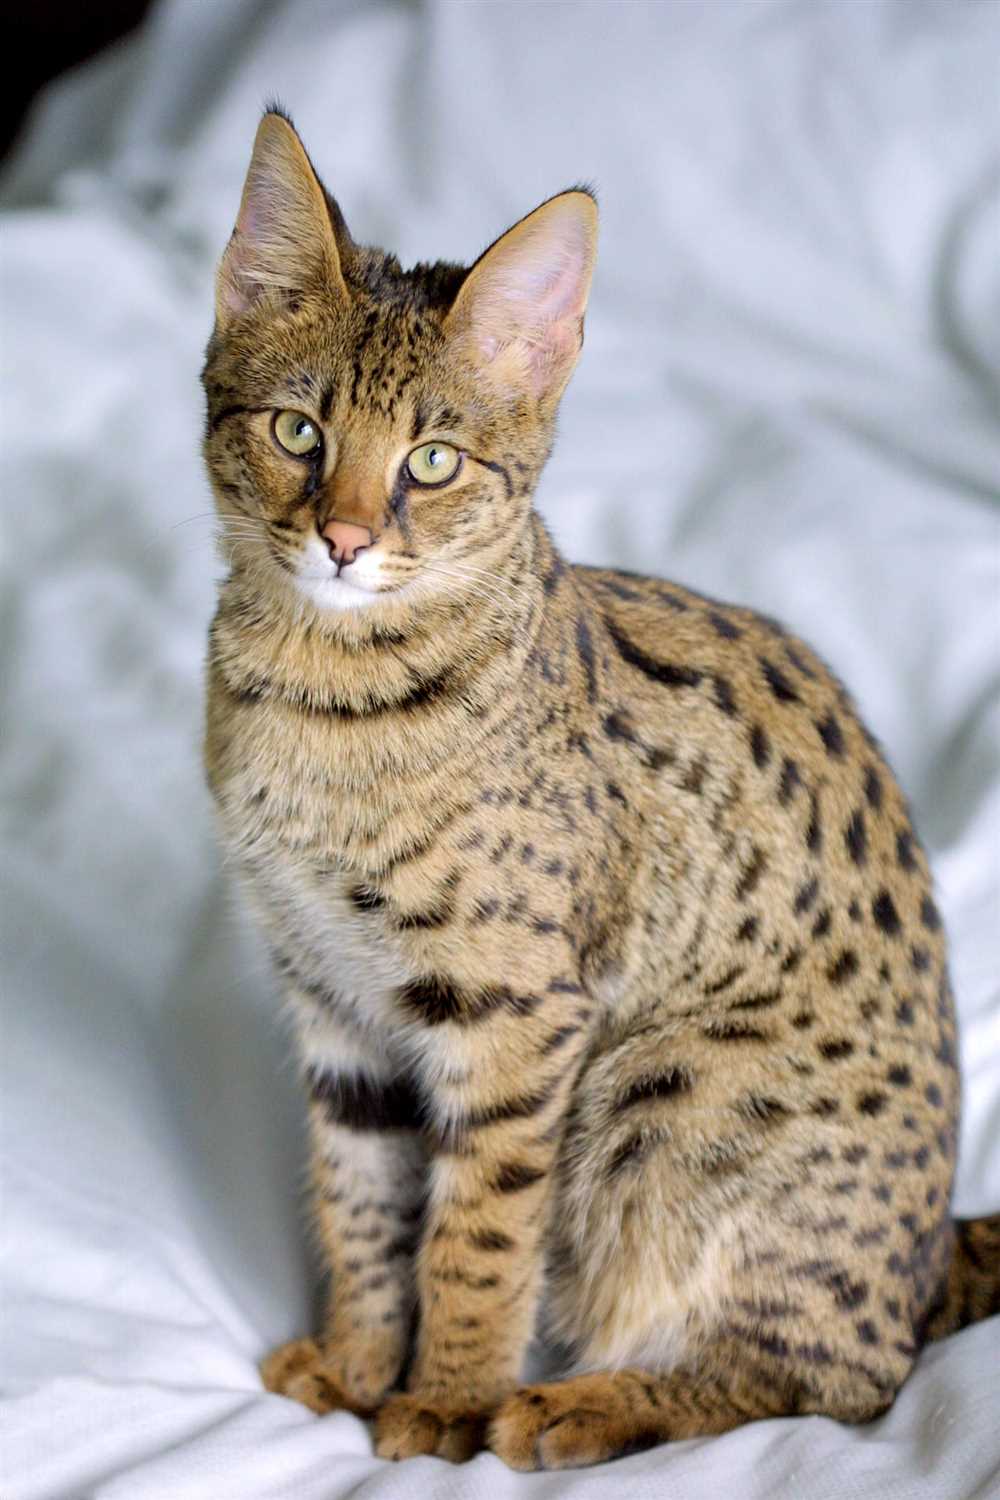 What Makes the Savannah Cat Breed Unique?